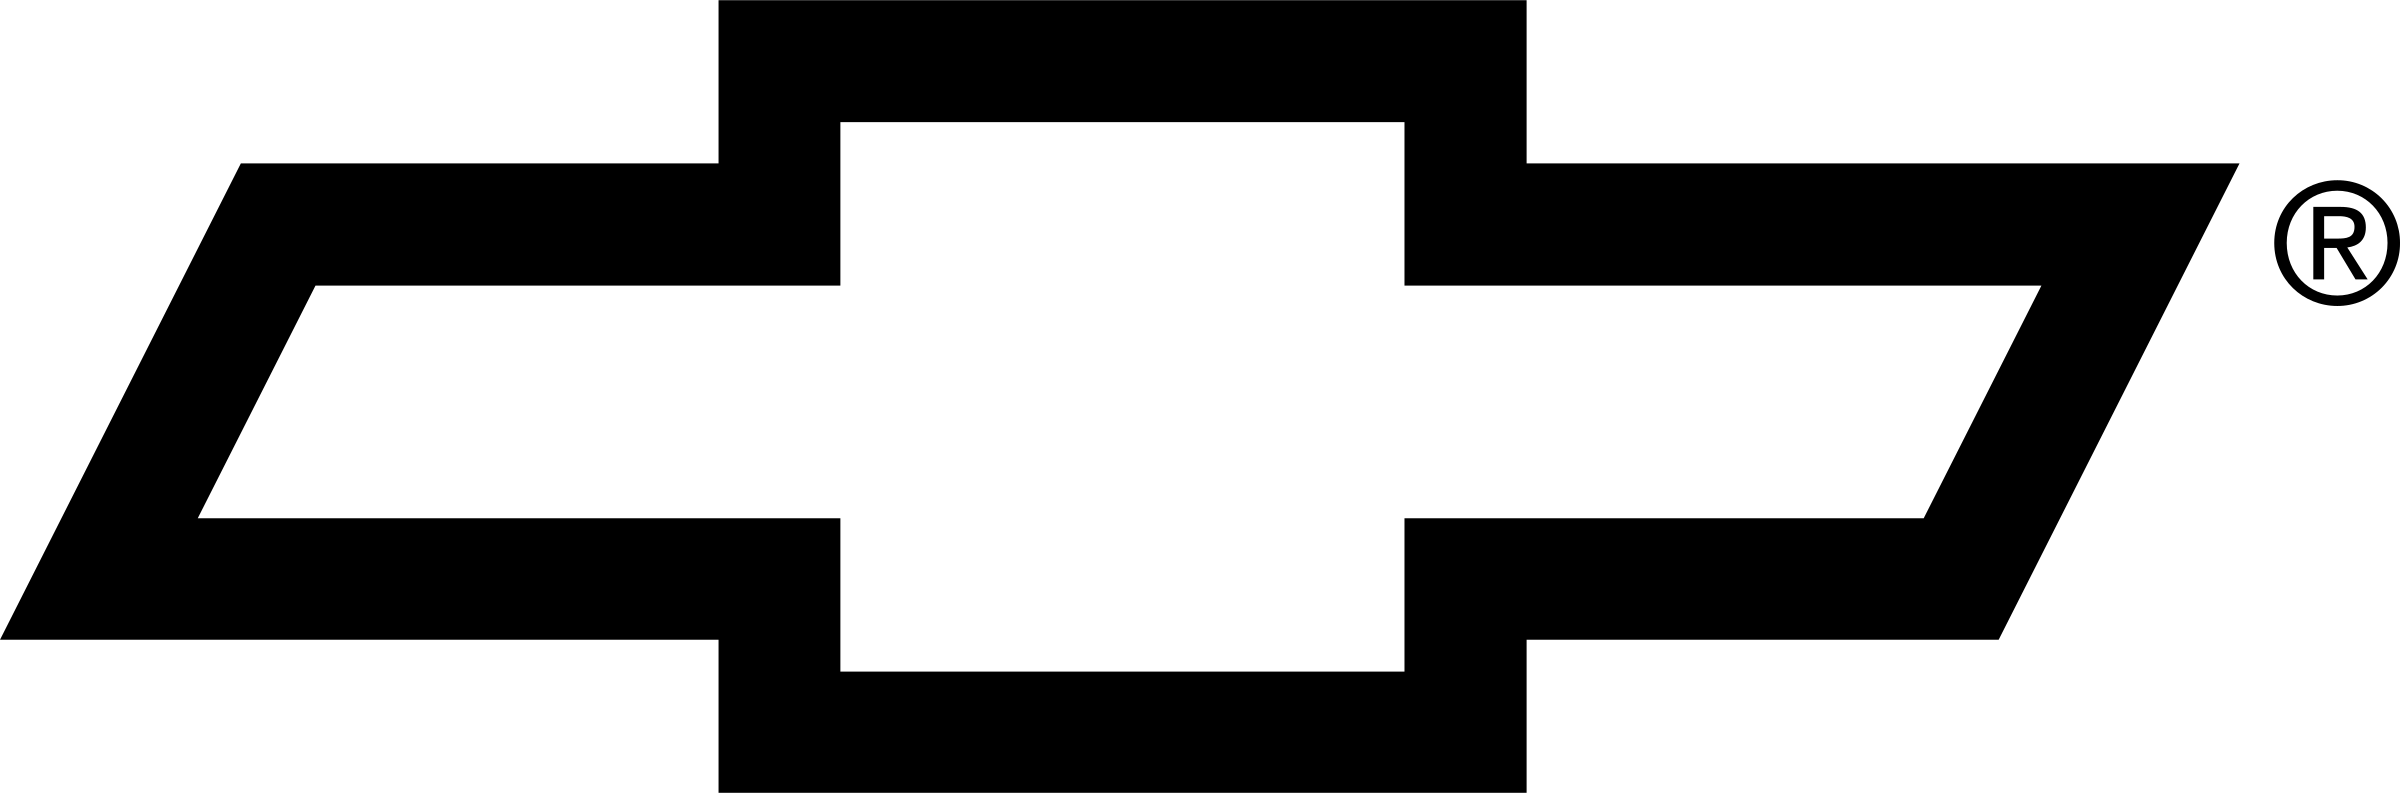 Chevy Bowtie Vector - Chevy Bowtie Logo (2400x793)